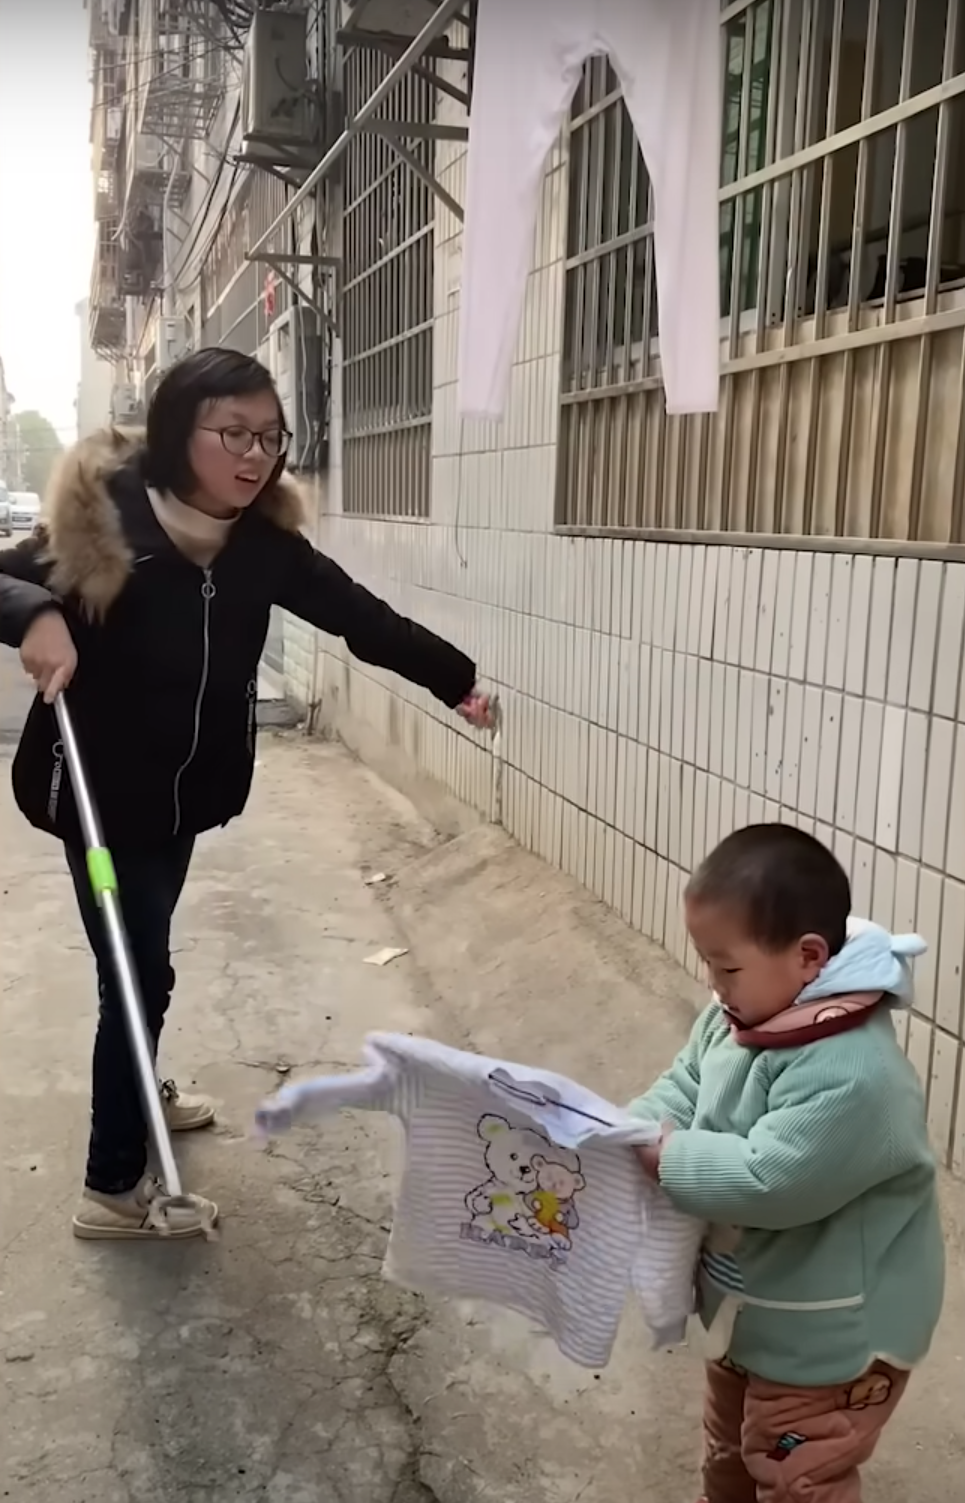 Pomelo ayuda a su madre a lavar ropa. | Foto: Youtube.com/South China Morning Post